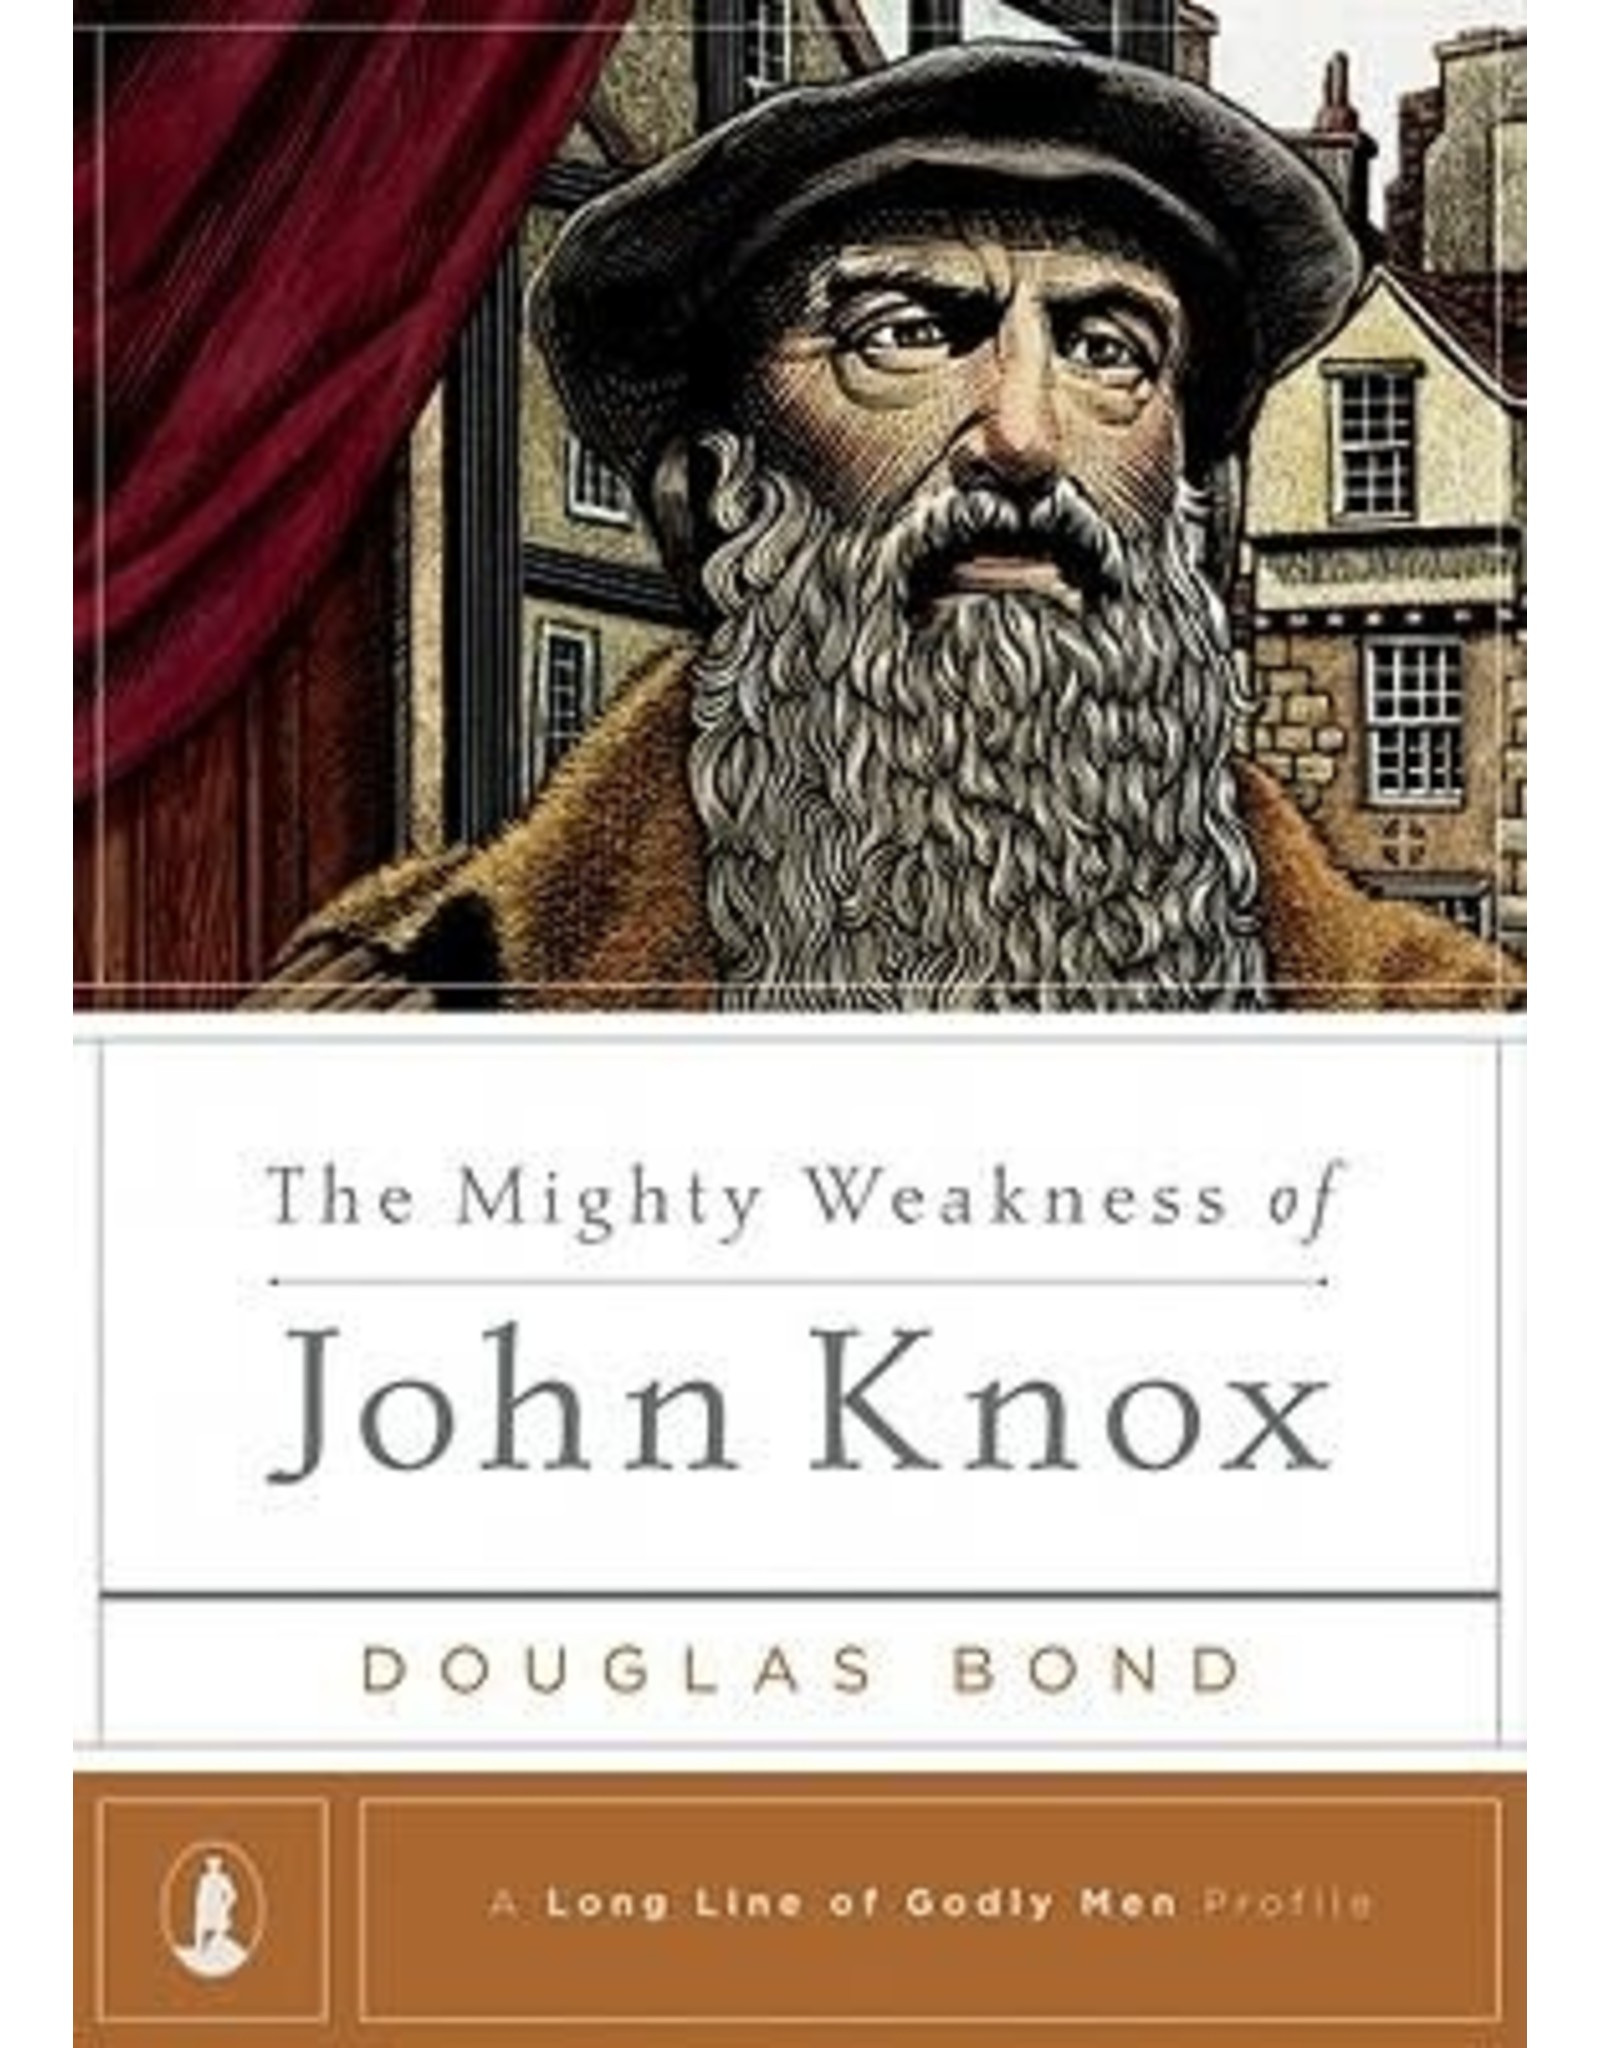 Douglas Bond The Mighty Weakness of John Knox - A Long line of Godly Men